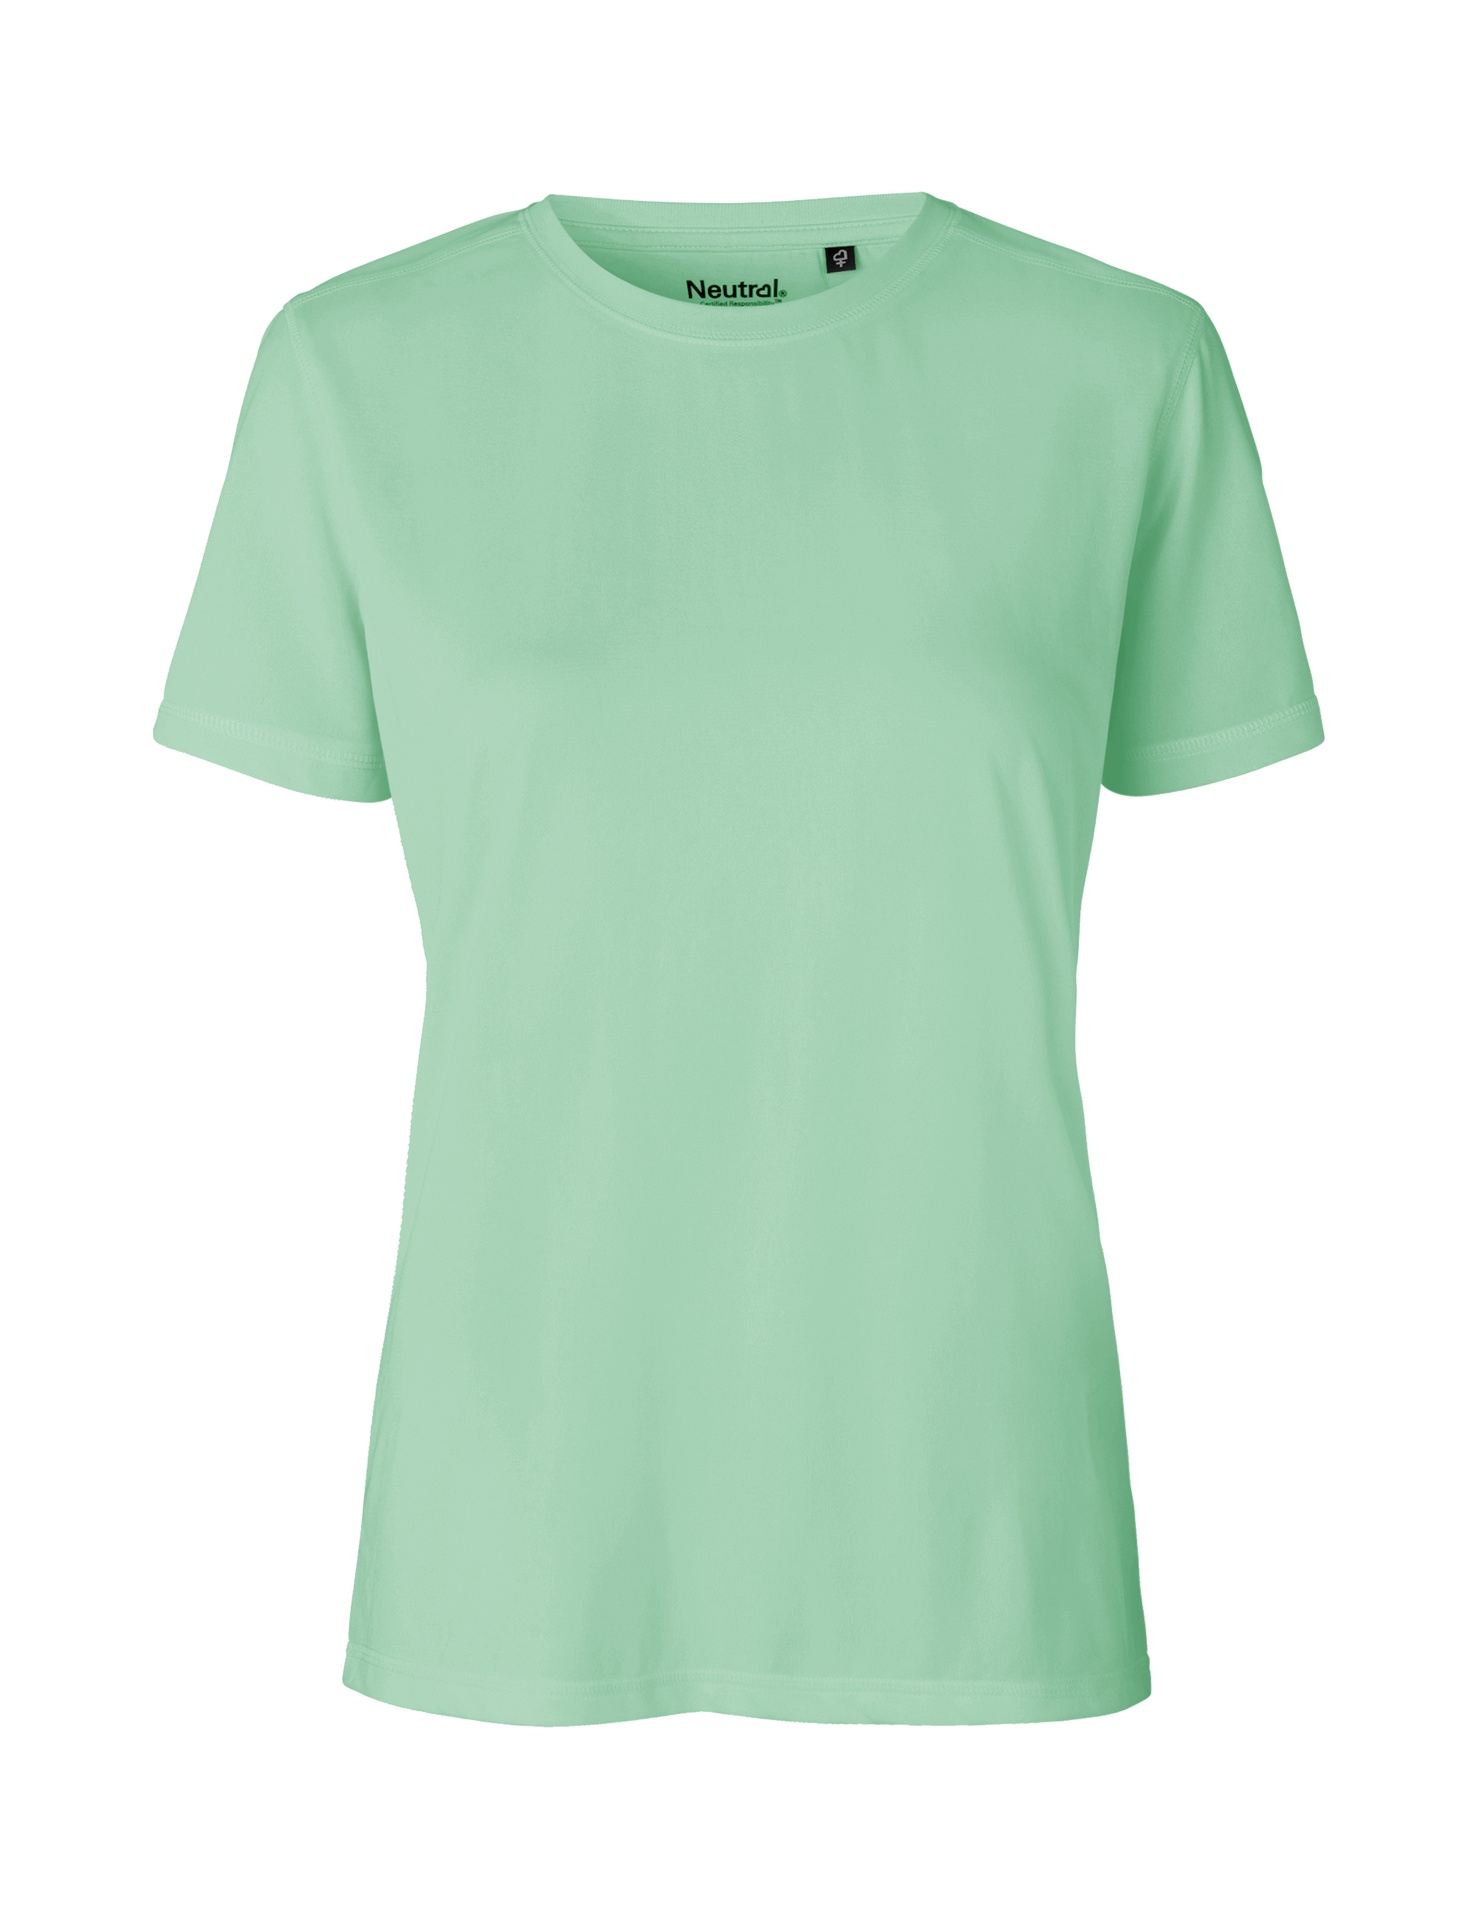 [PR/05242] Ladies Recycled Performance T-Shirt (Dusty Mint 40, M)